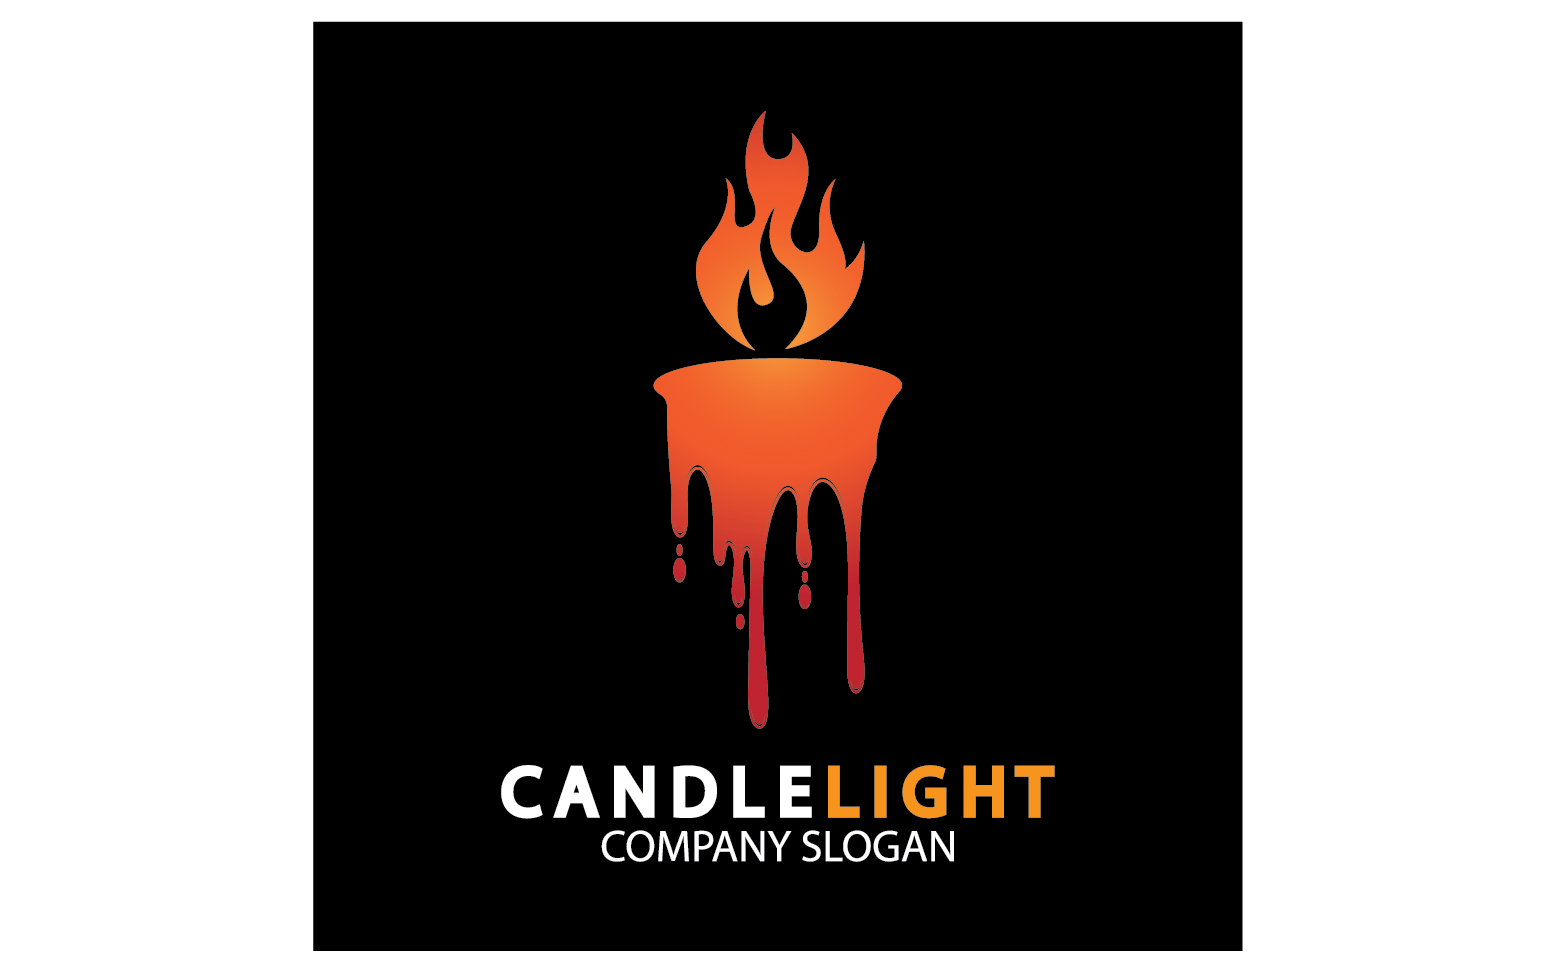 Candle light icon logo vcetor template v60